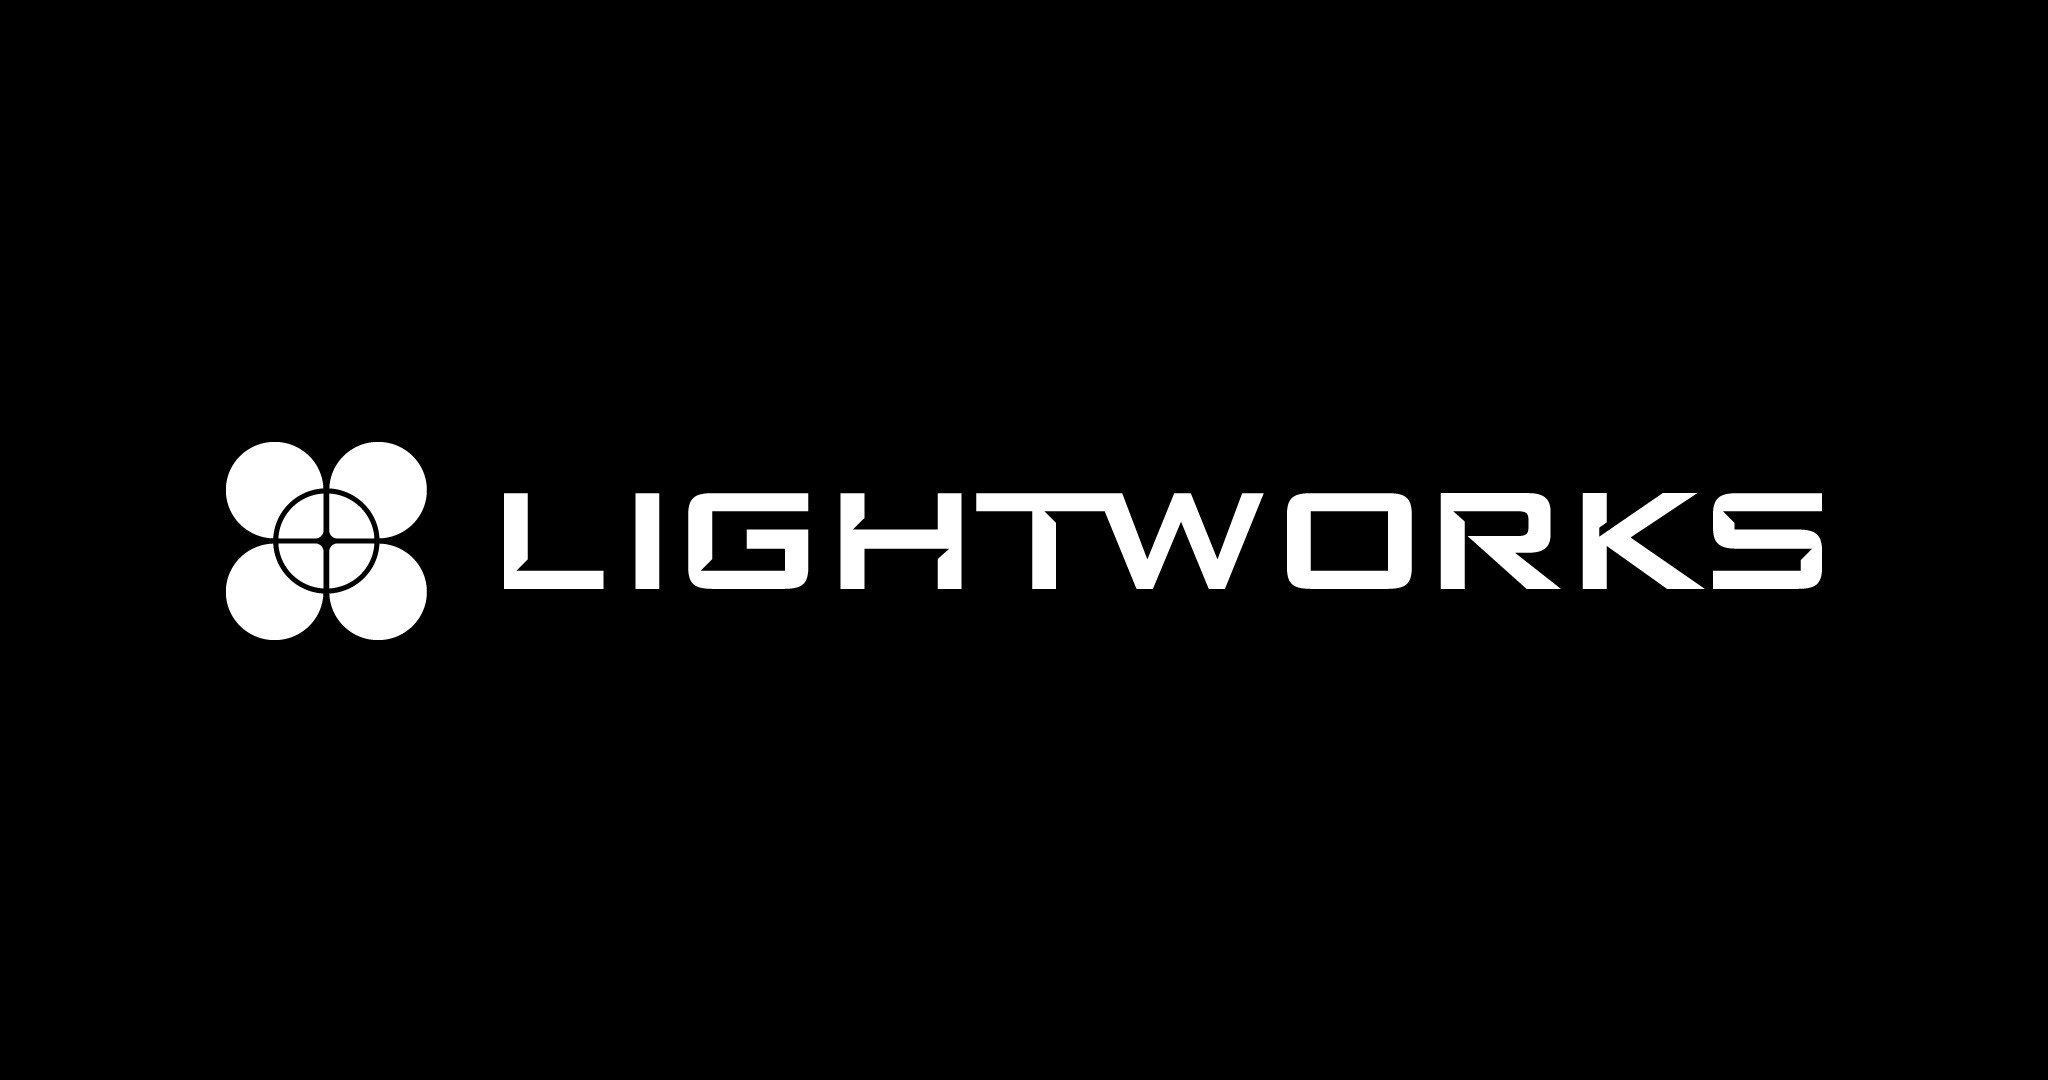 lightwrks